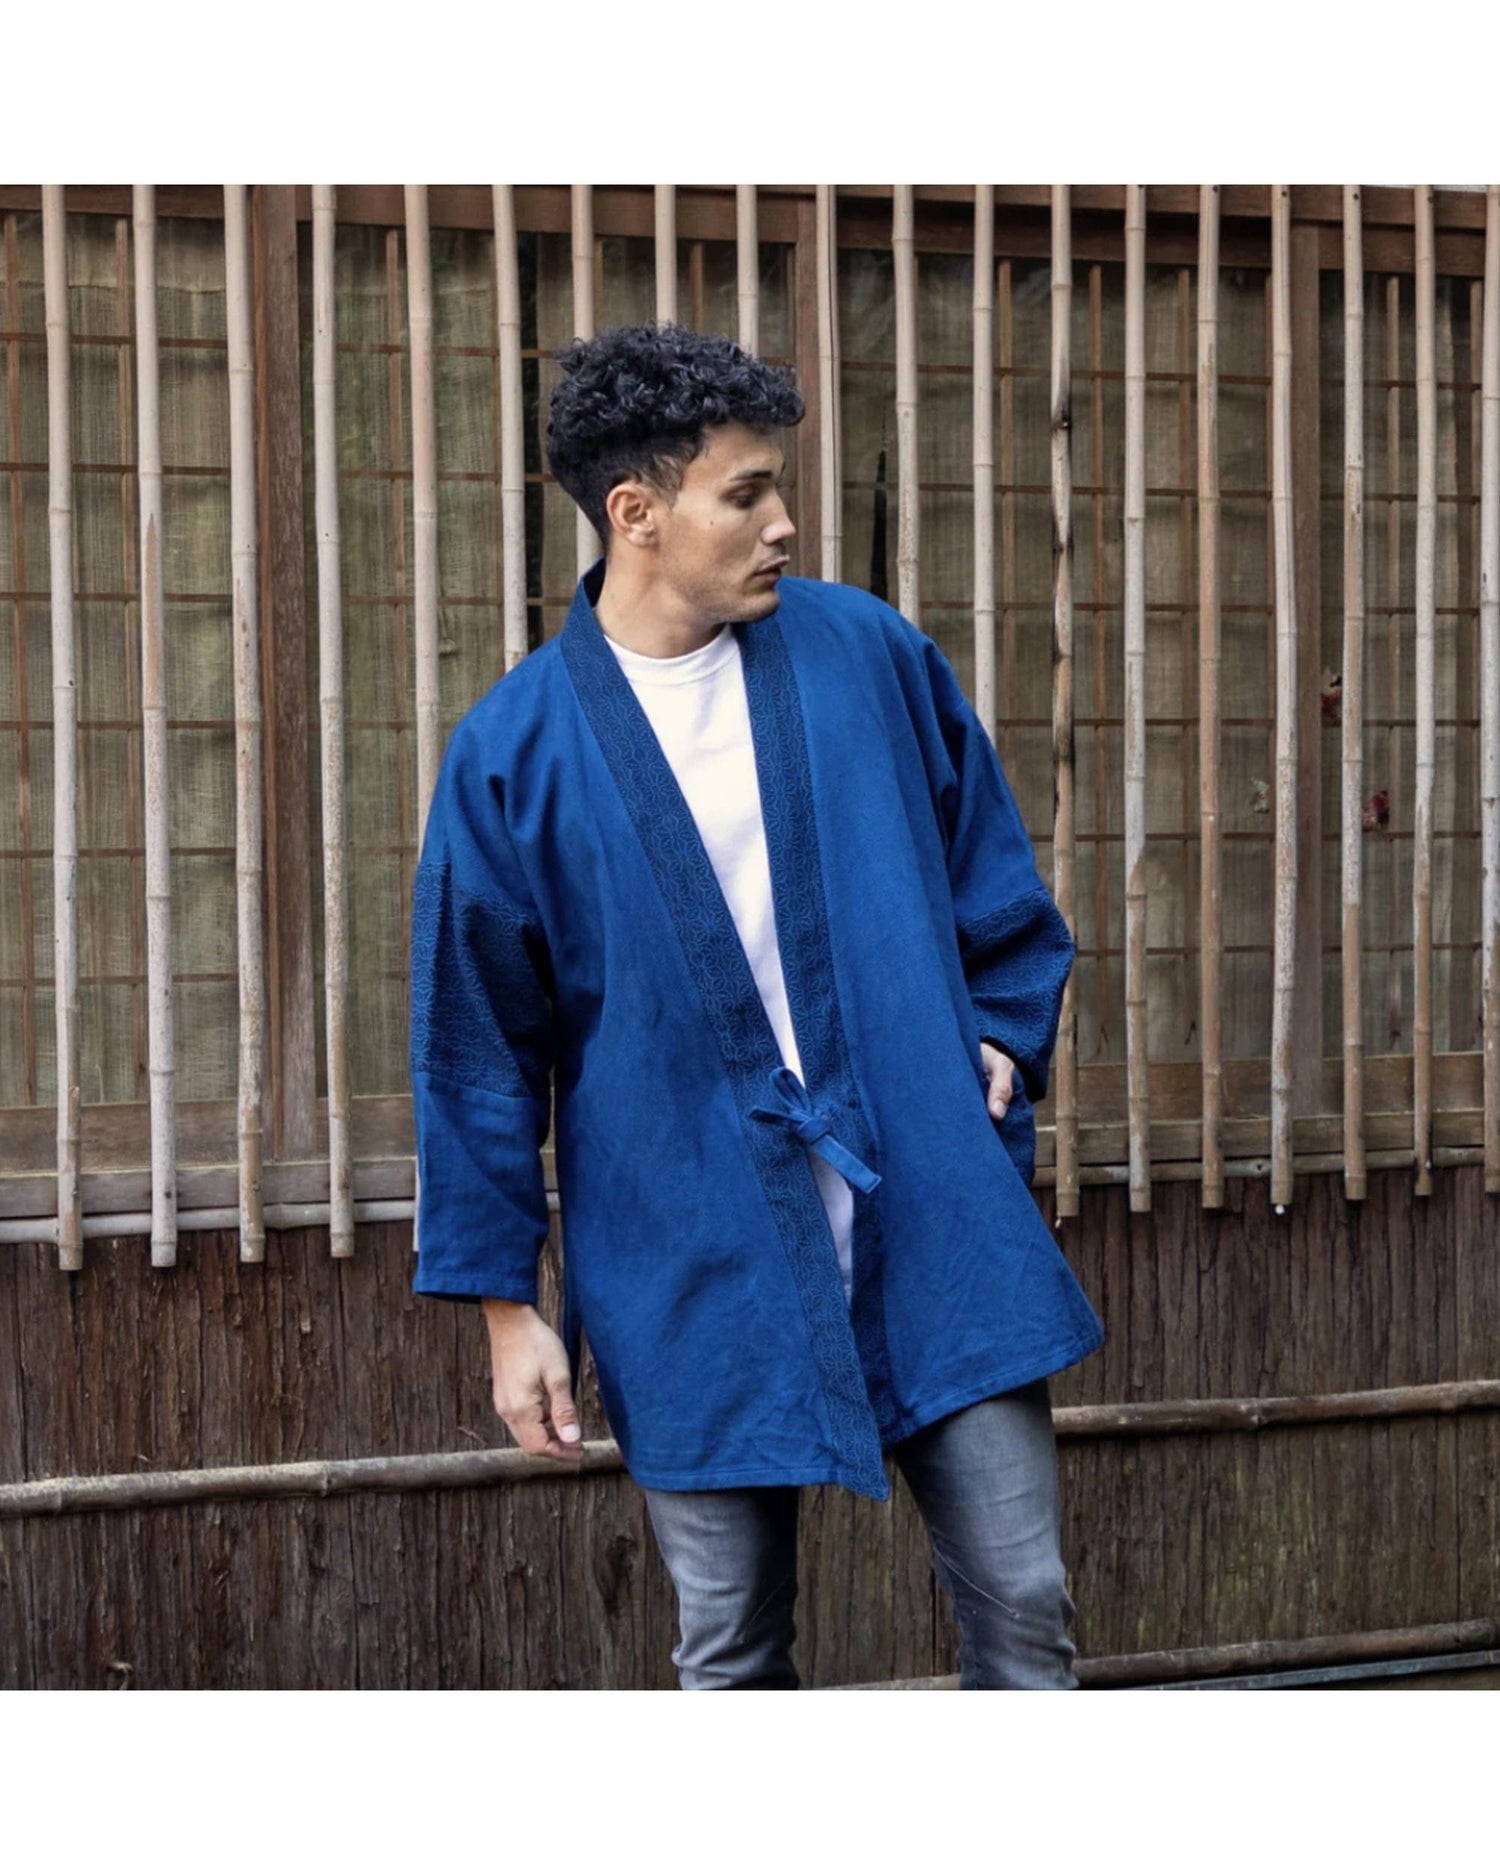 Mastercrafstmanship Patchwork Samue Jacket (Blue) Sashiko - Kimono style